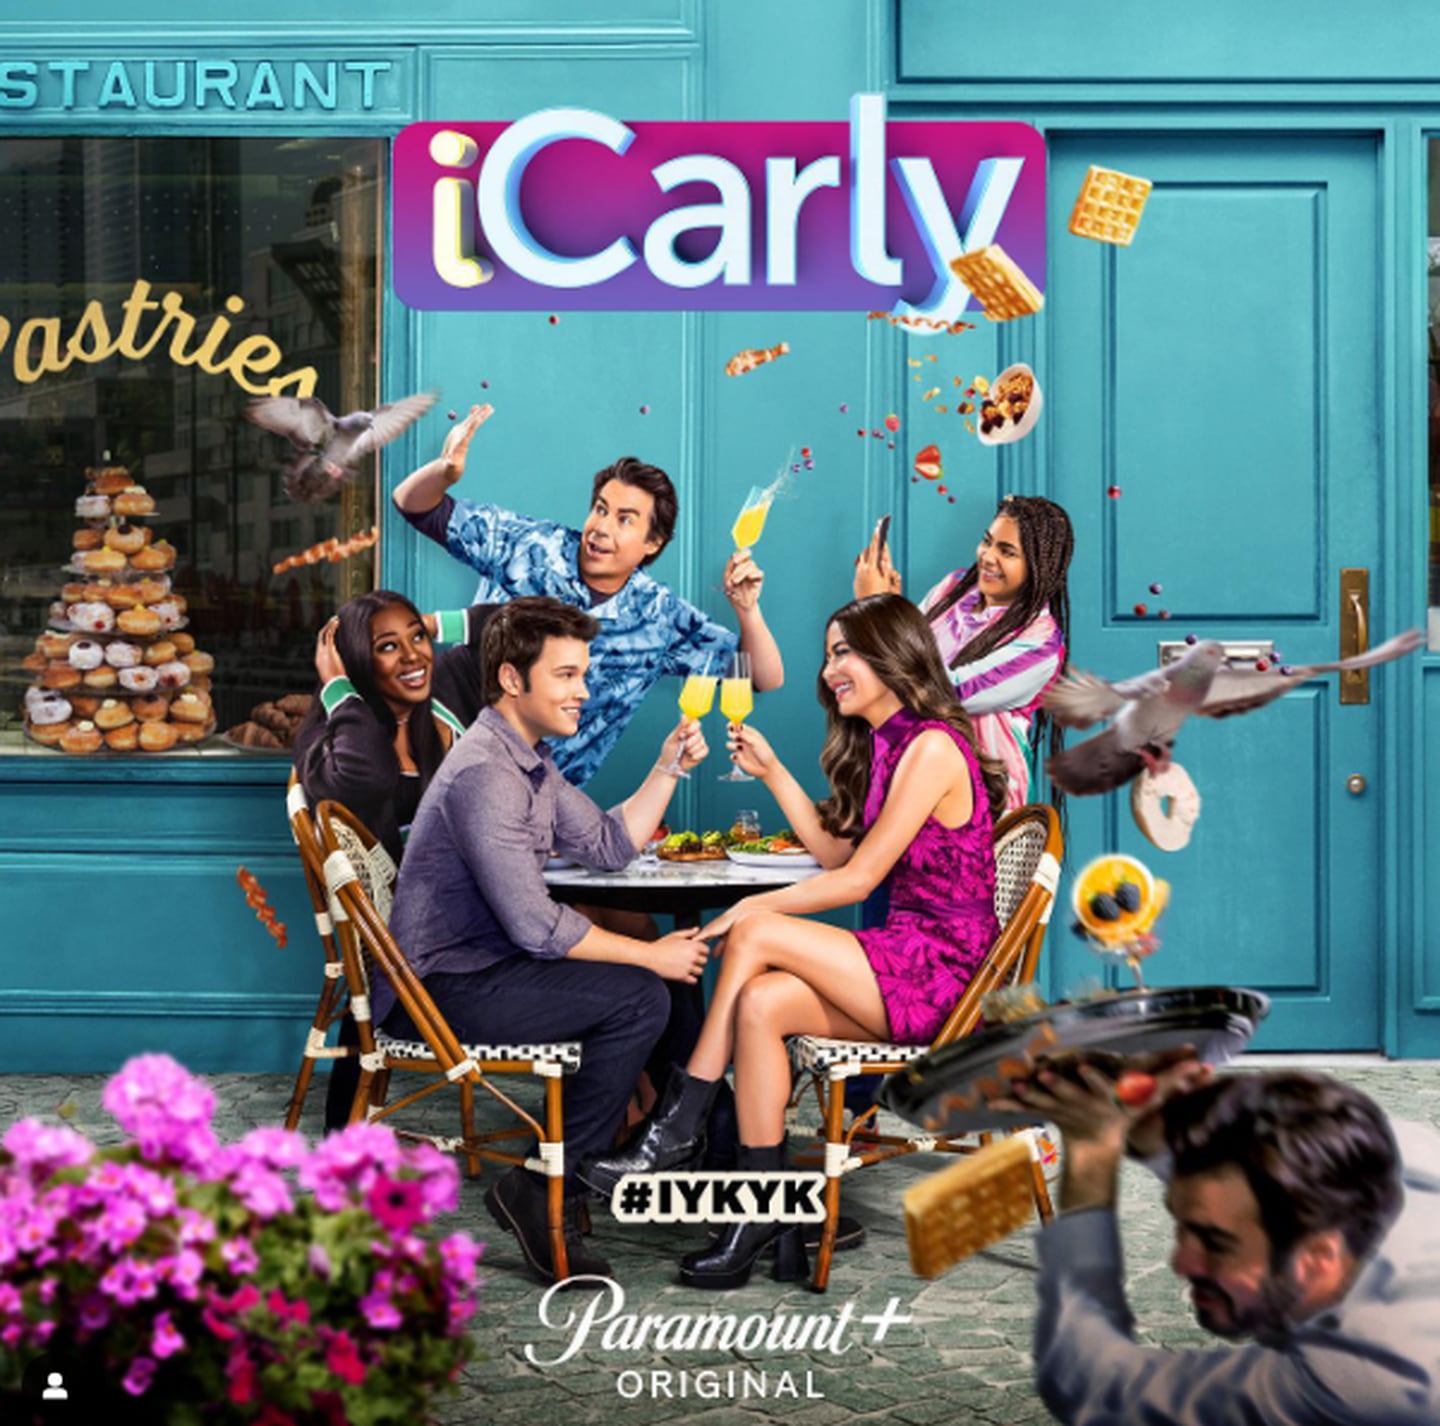 iCarly fue cancelada por Paramount+